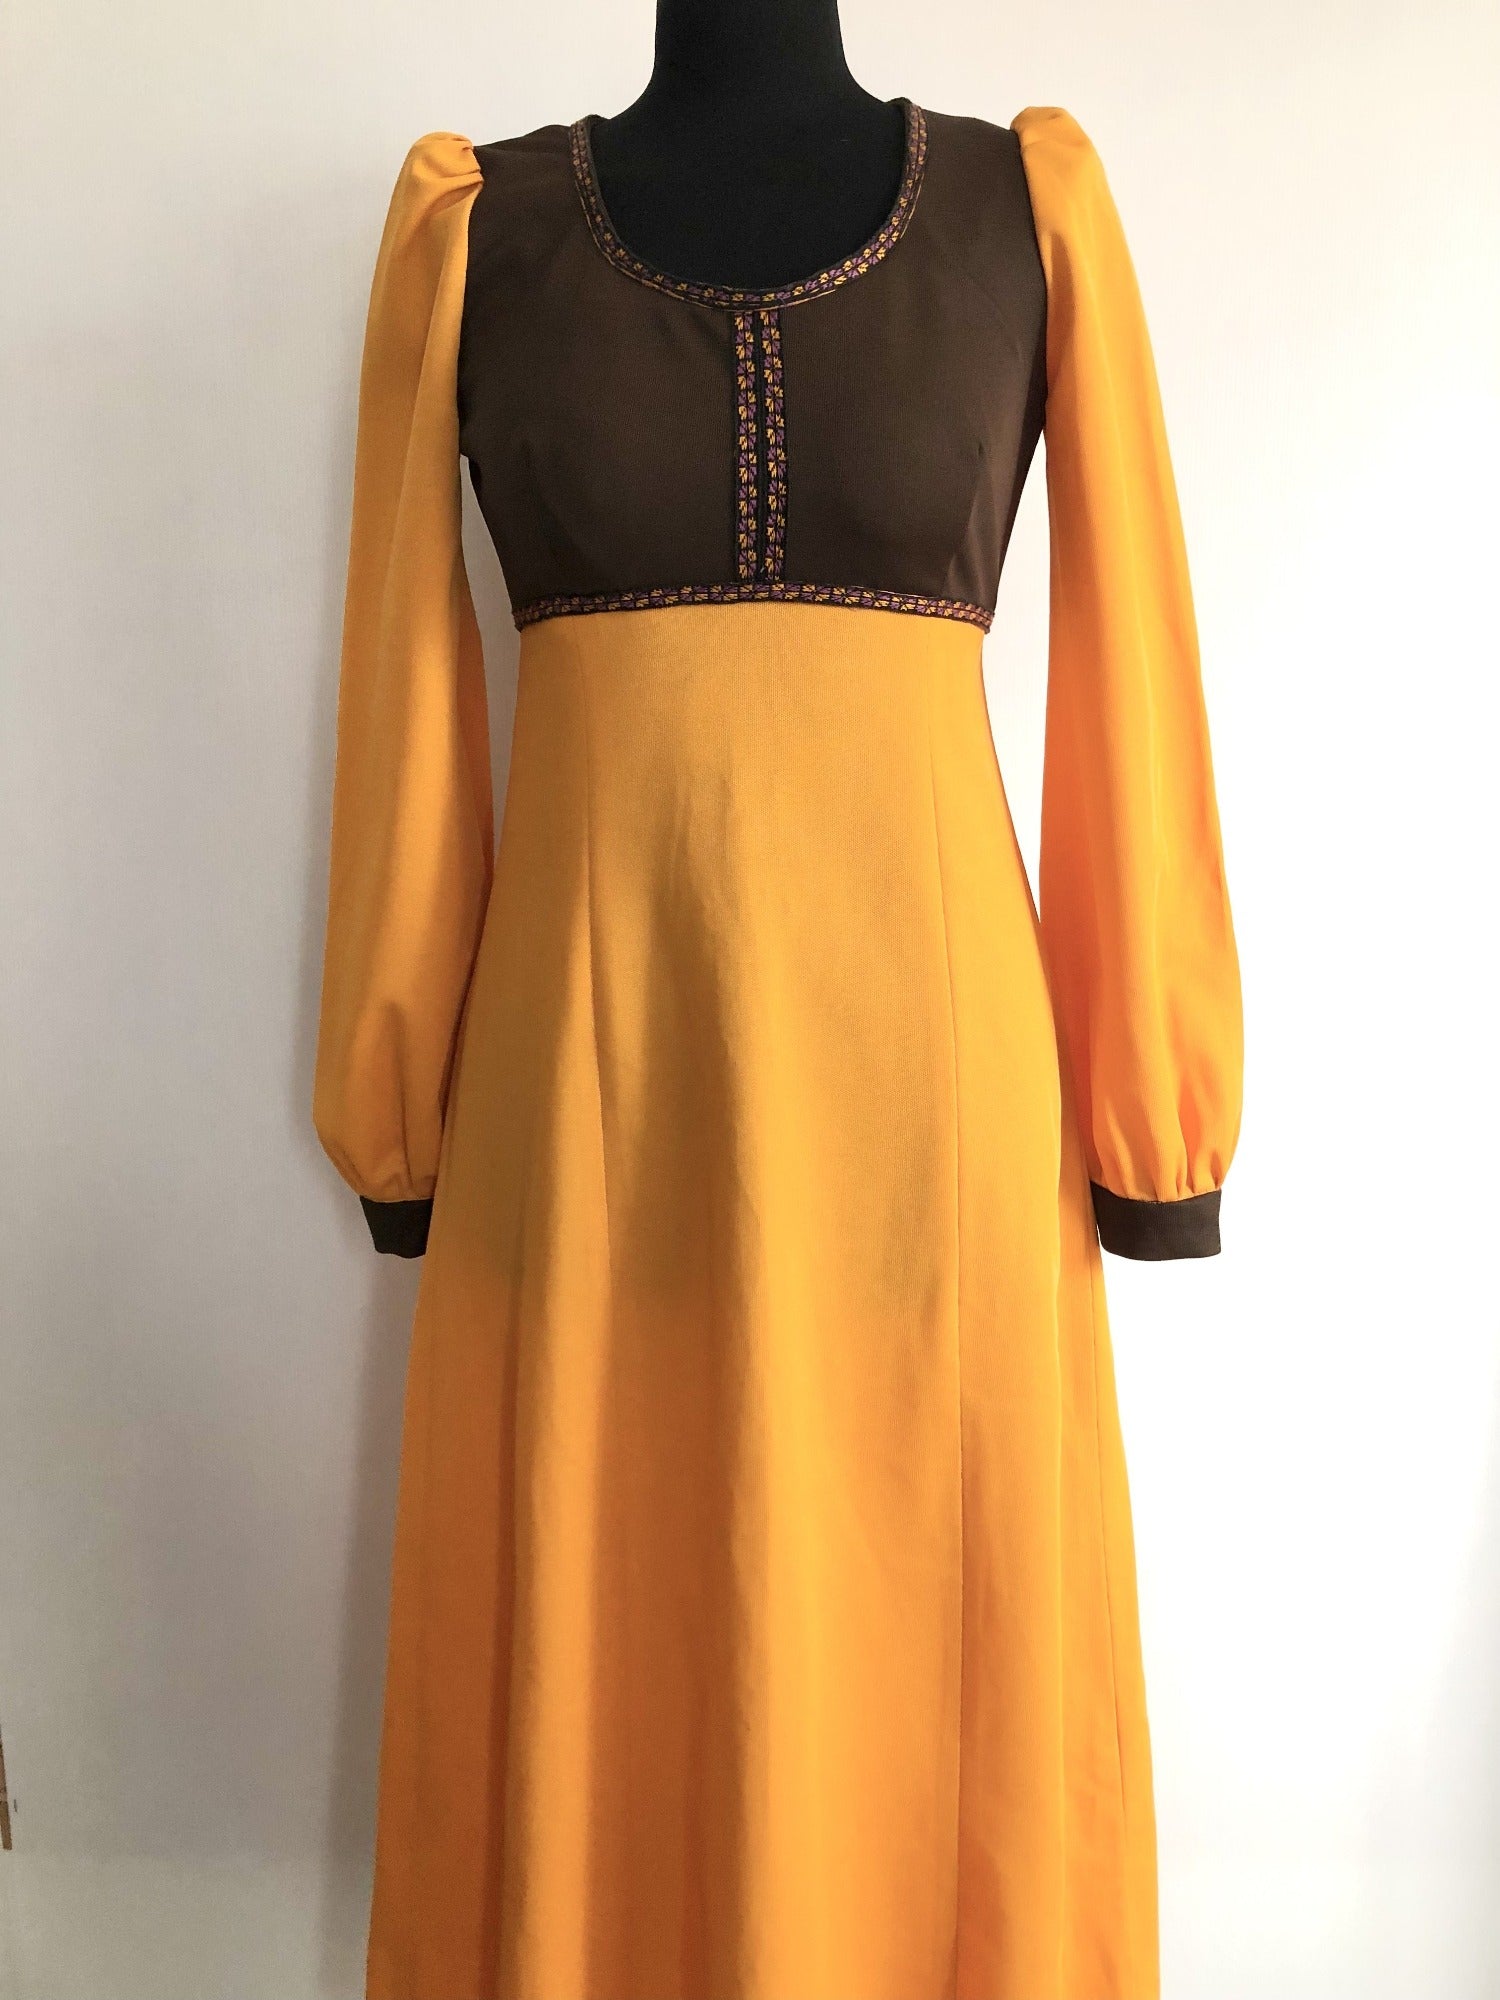 zip back  womens  vintage  Urban Village Vintage  orange  midi length  midi dress  long sleeved  dress  brown  boho  balloon sleeves  60s  1960s  10